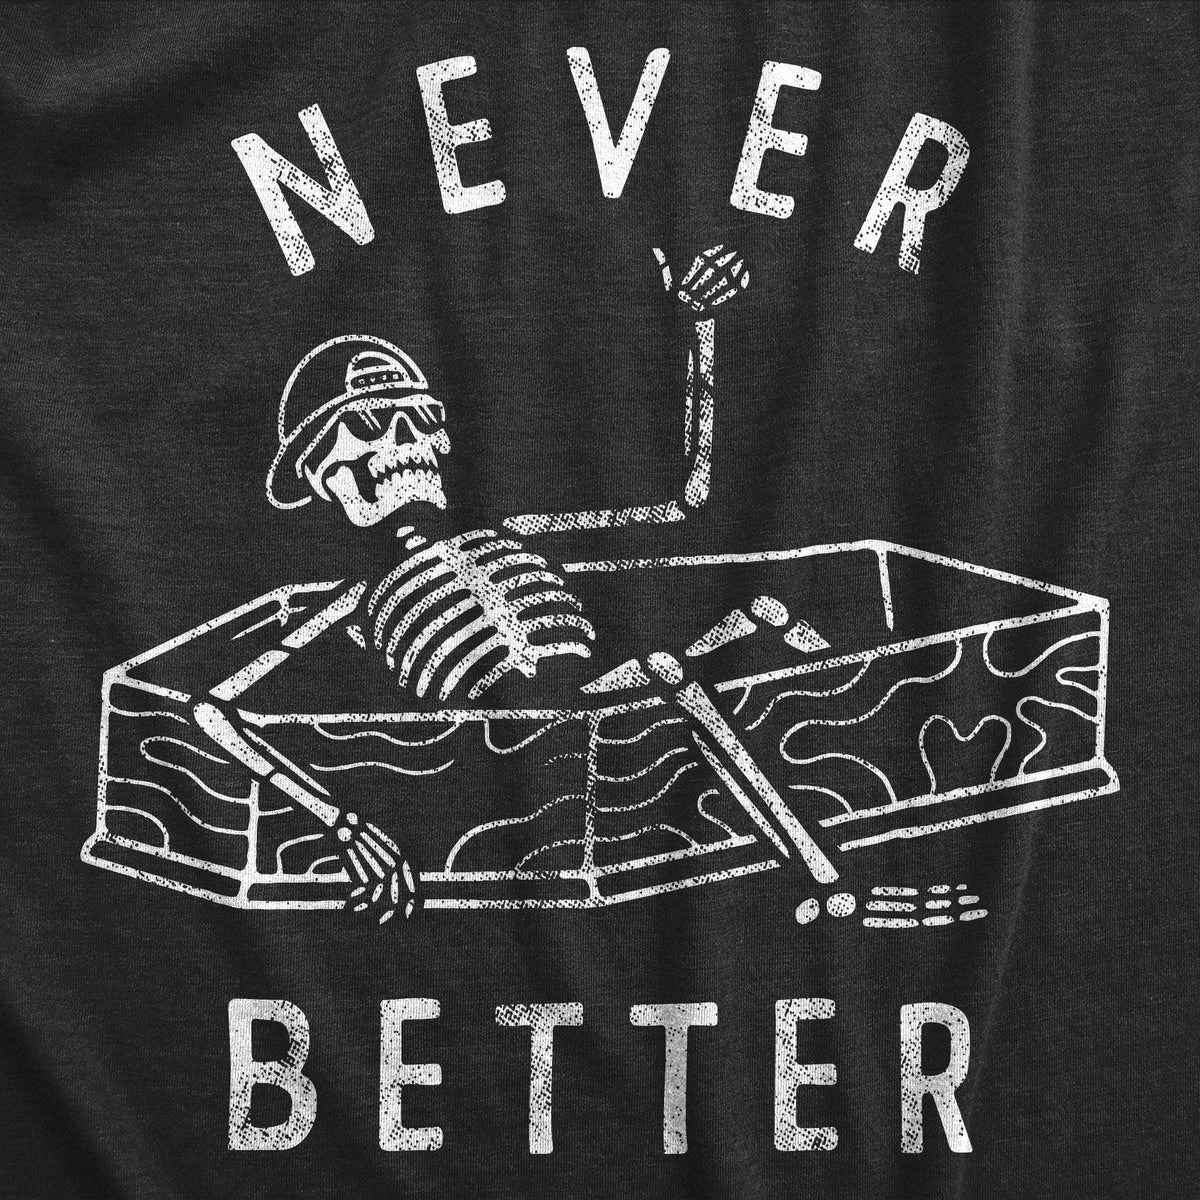 Never Better Men&#39;s Tshirt  -  Crazy Dog T-Shirts